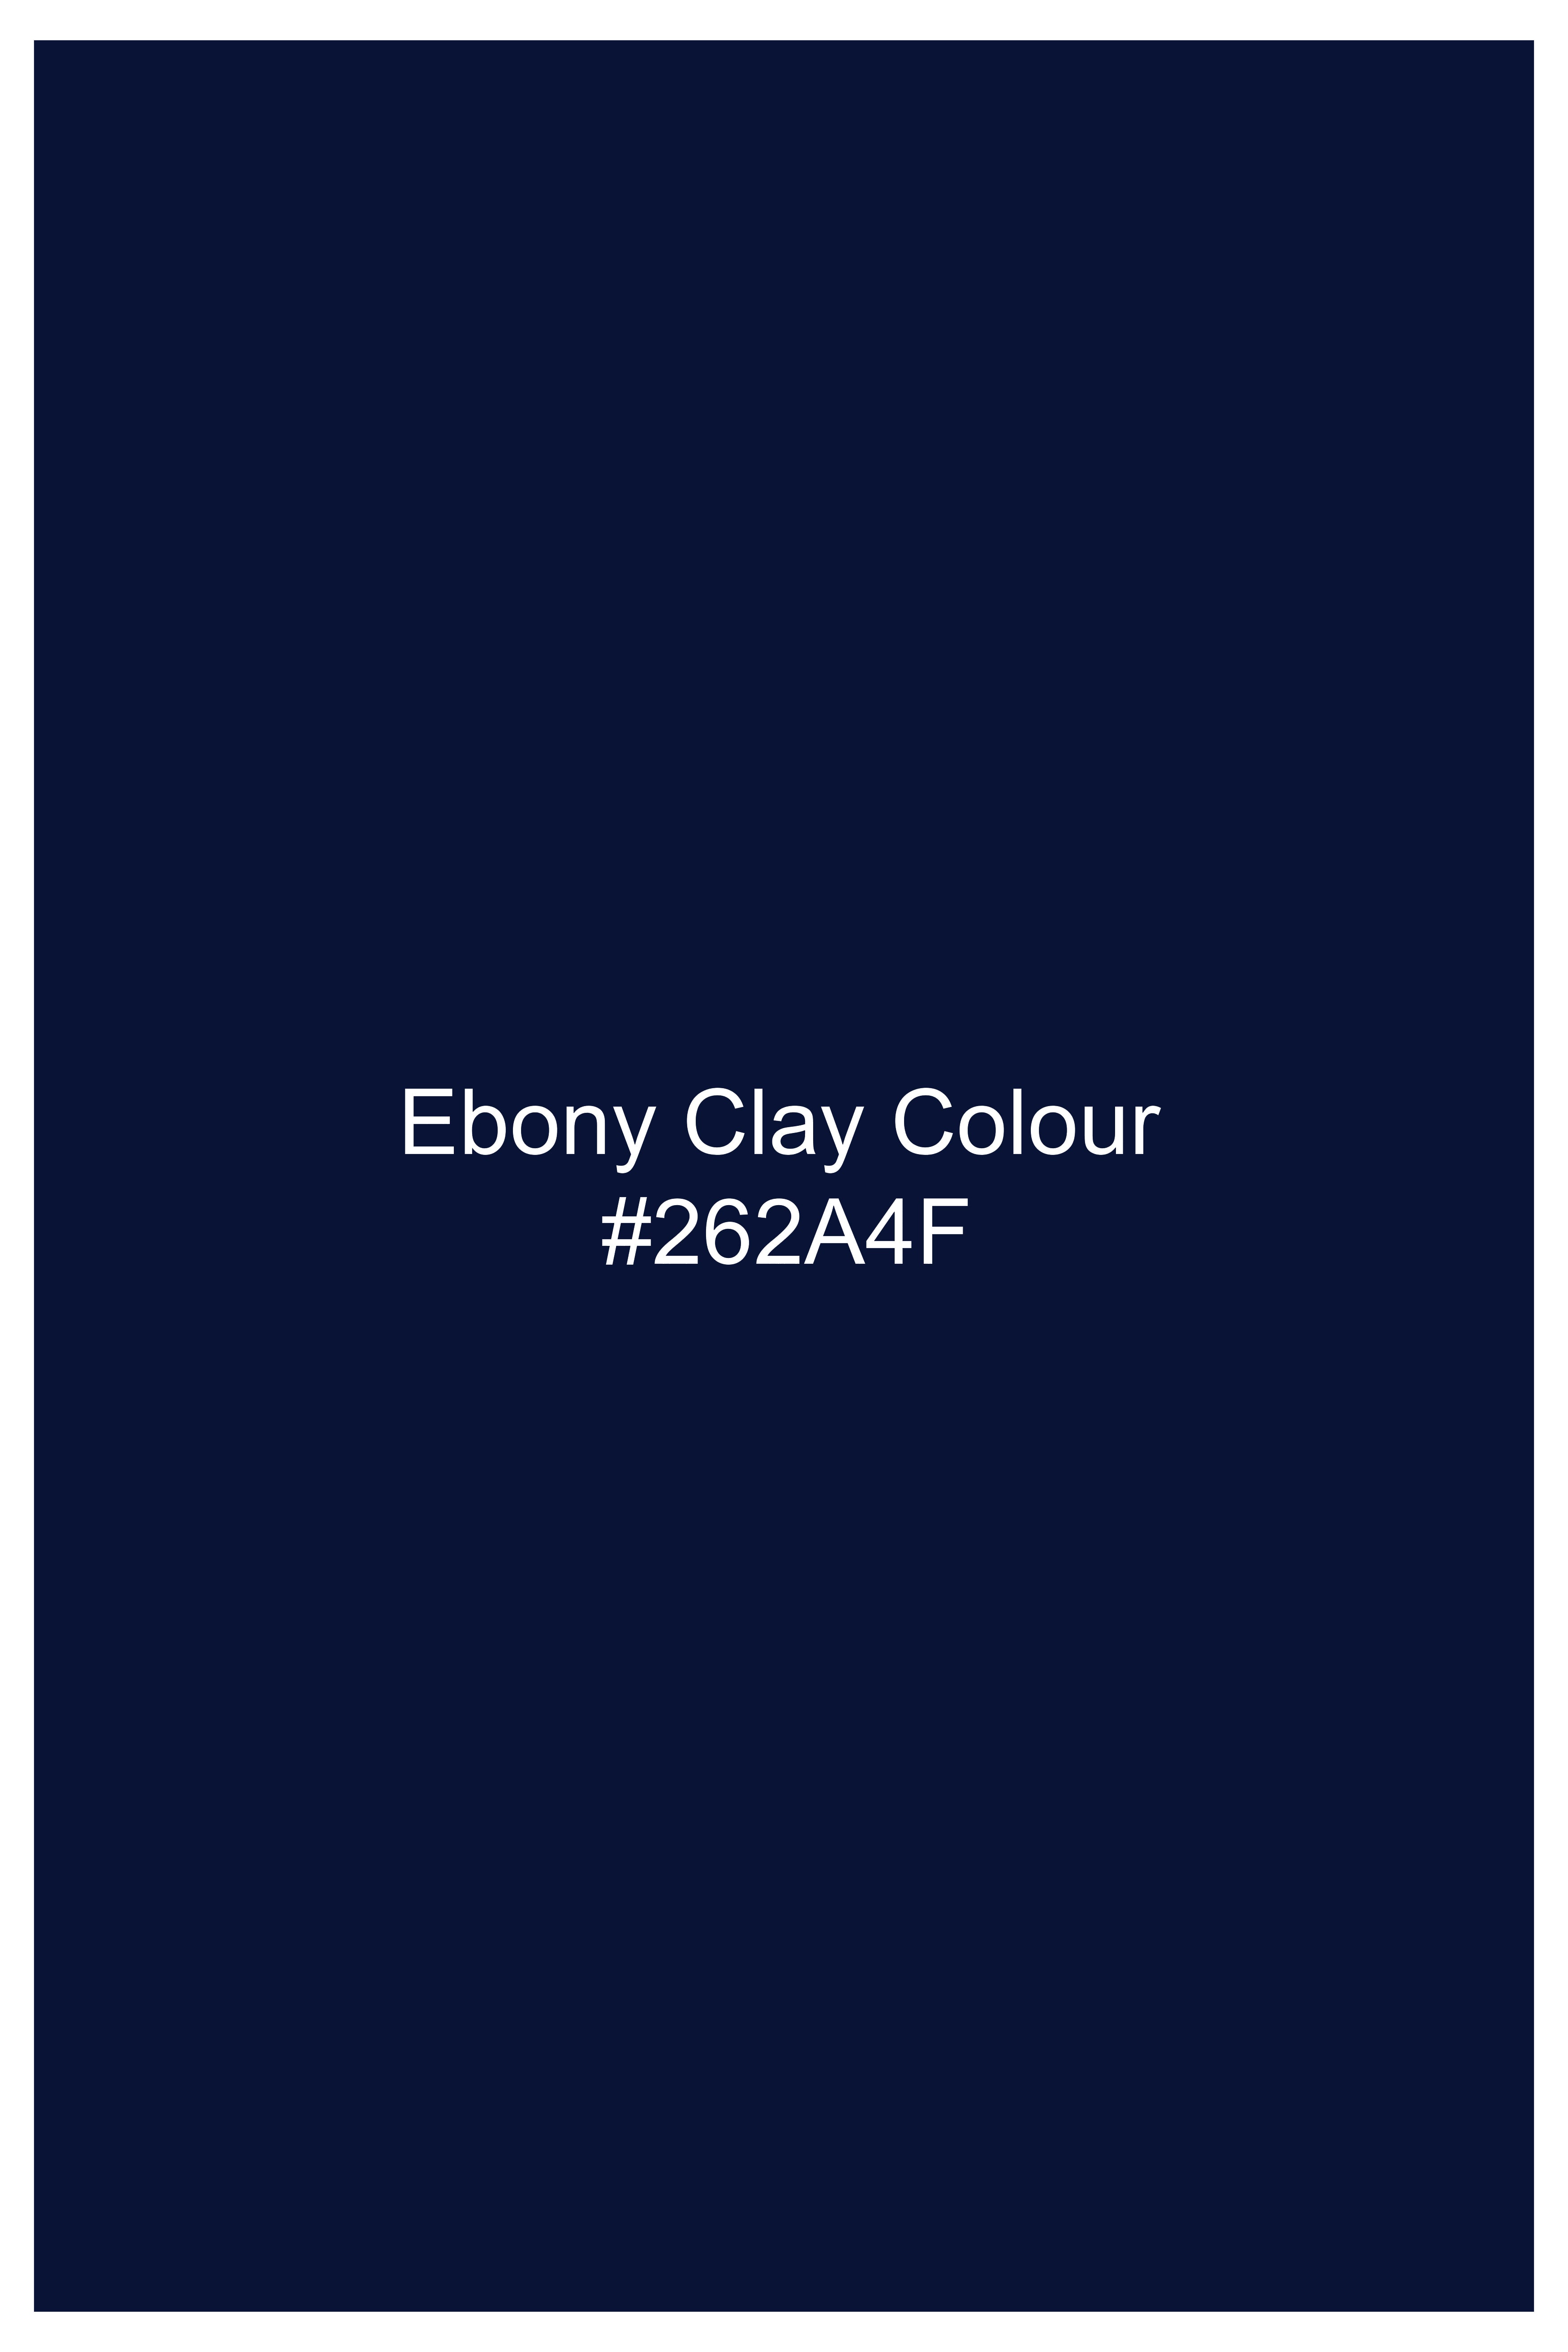 Ebony Clay Blue Wool Rich Designer Blazer BL2761-D132-36, BL2761-D132-38, BL2761-D132-40, BL2761-D132-42, BL2761-D132-44, BL2761-D132-46, BL2761-D132-48, BL2761-D132-50, BL2761-D132-52, BL2761-D132-54, BL2761-D132-56, BL2761-D132-58, BL2761-D132-60